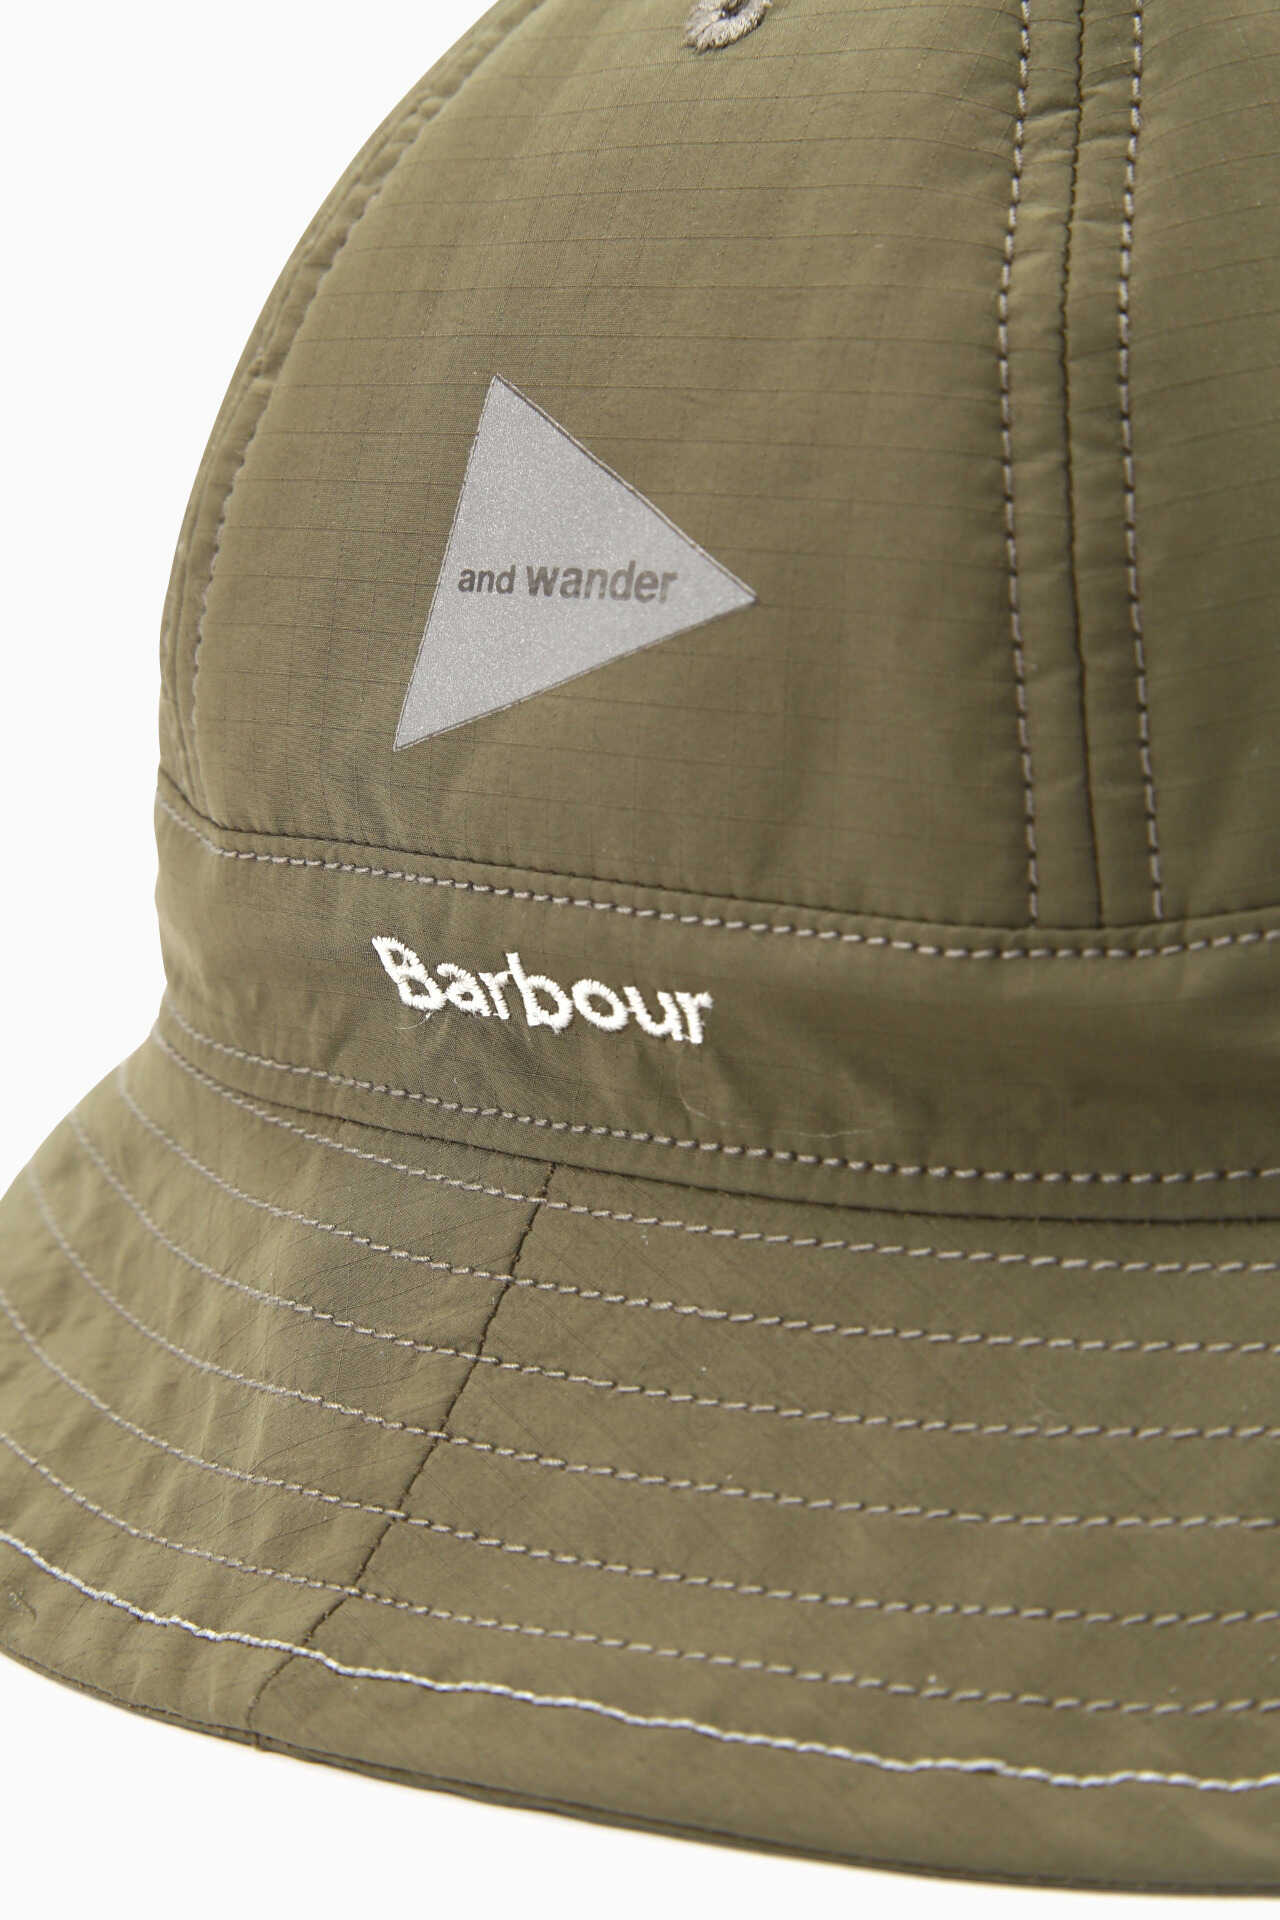 Barbour rip hat